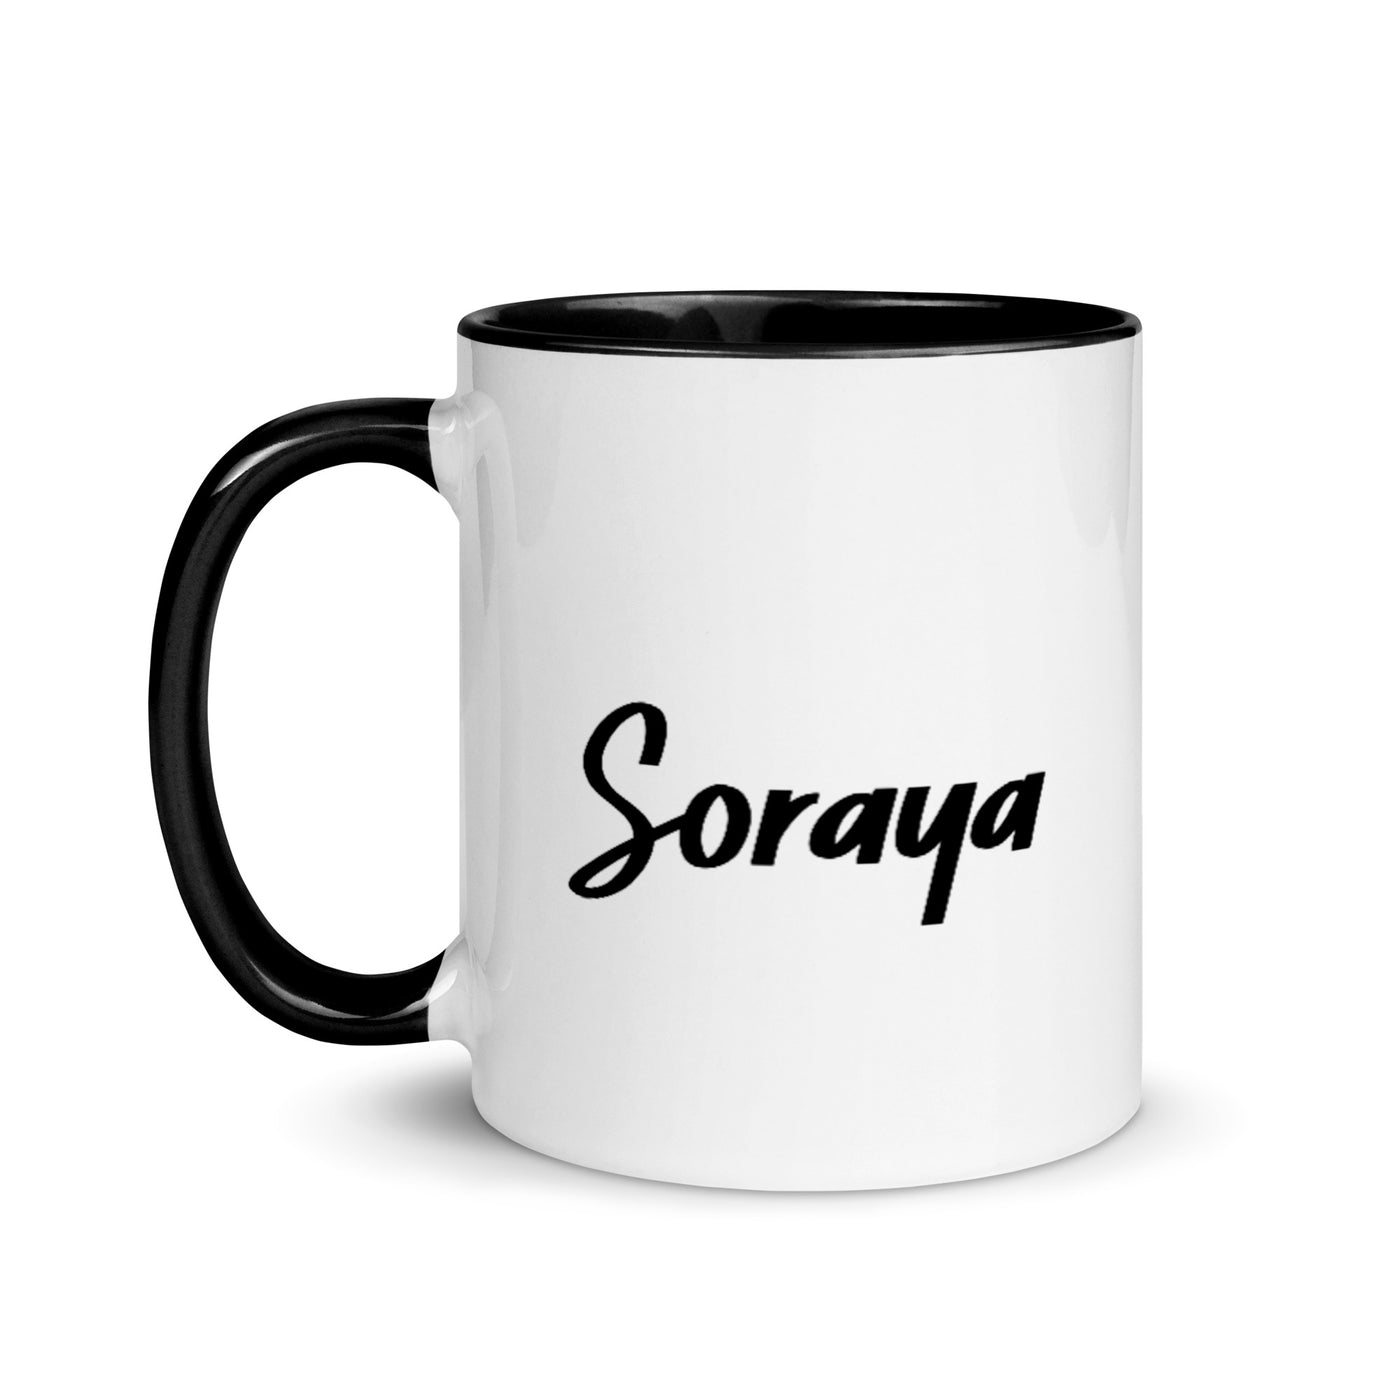 Soraya - Mug with Color Inside